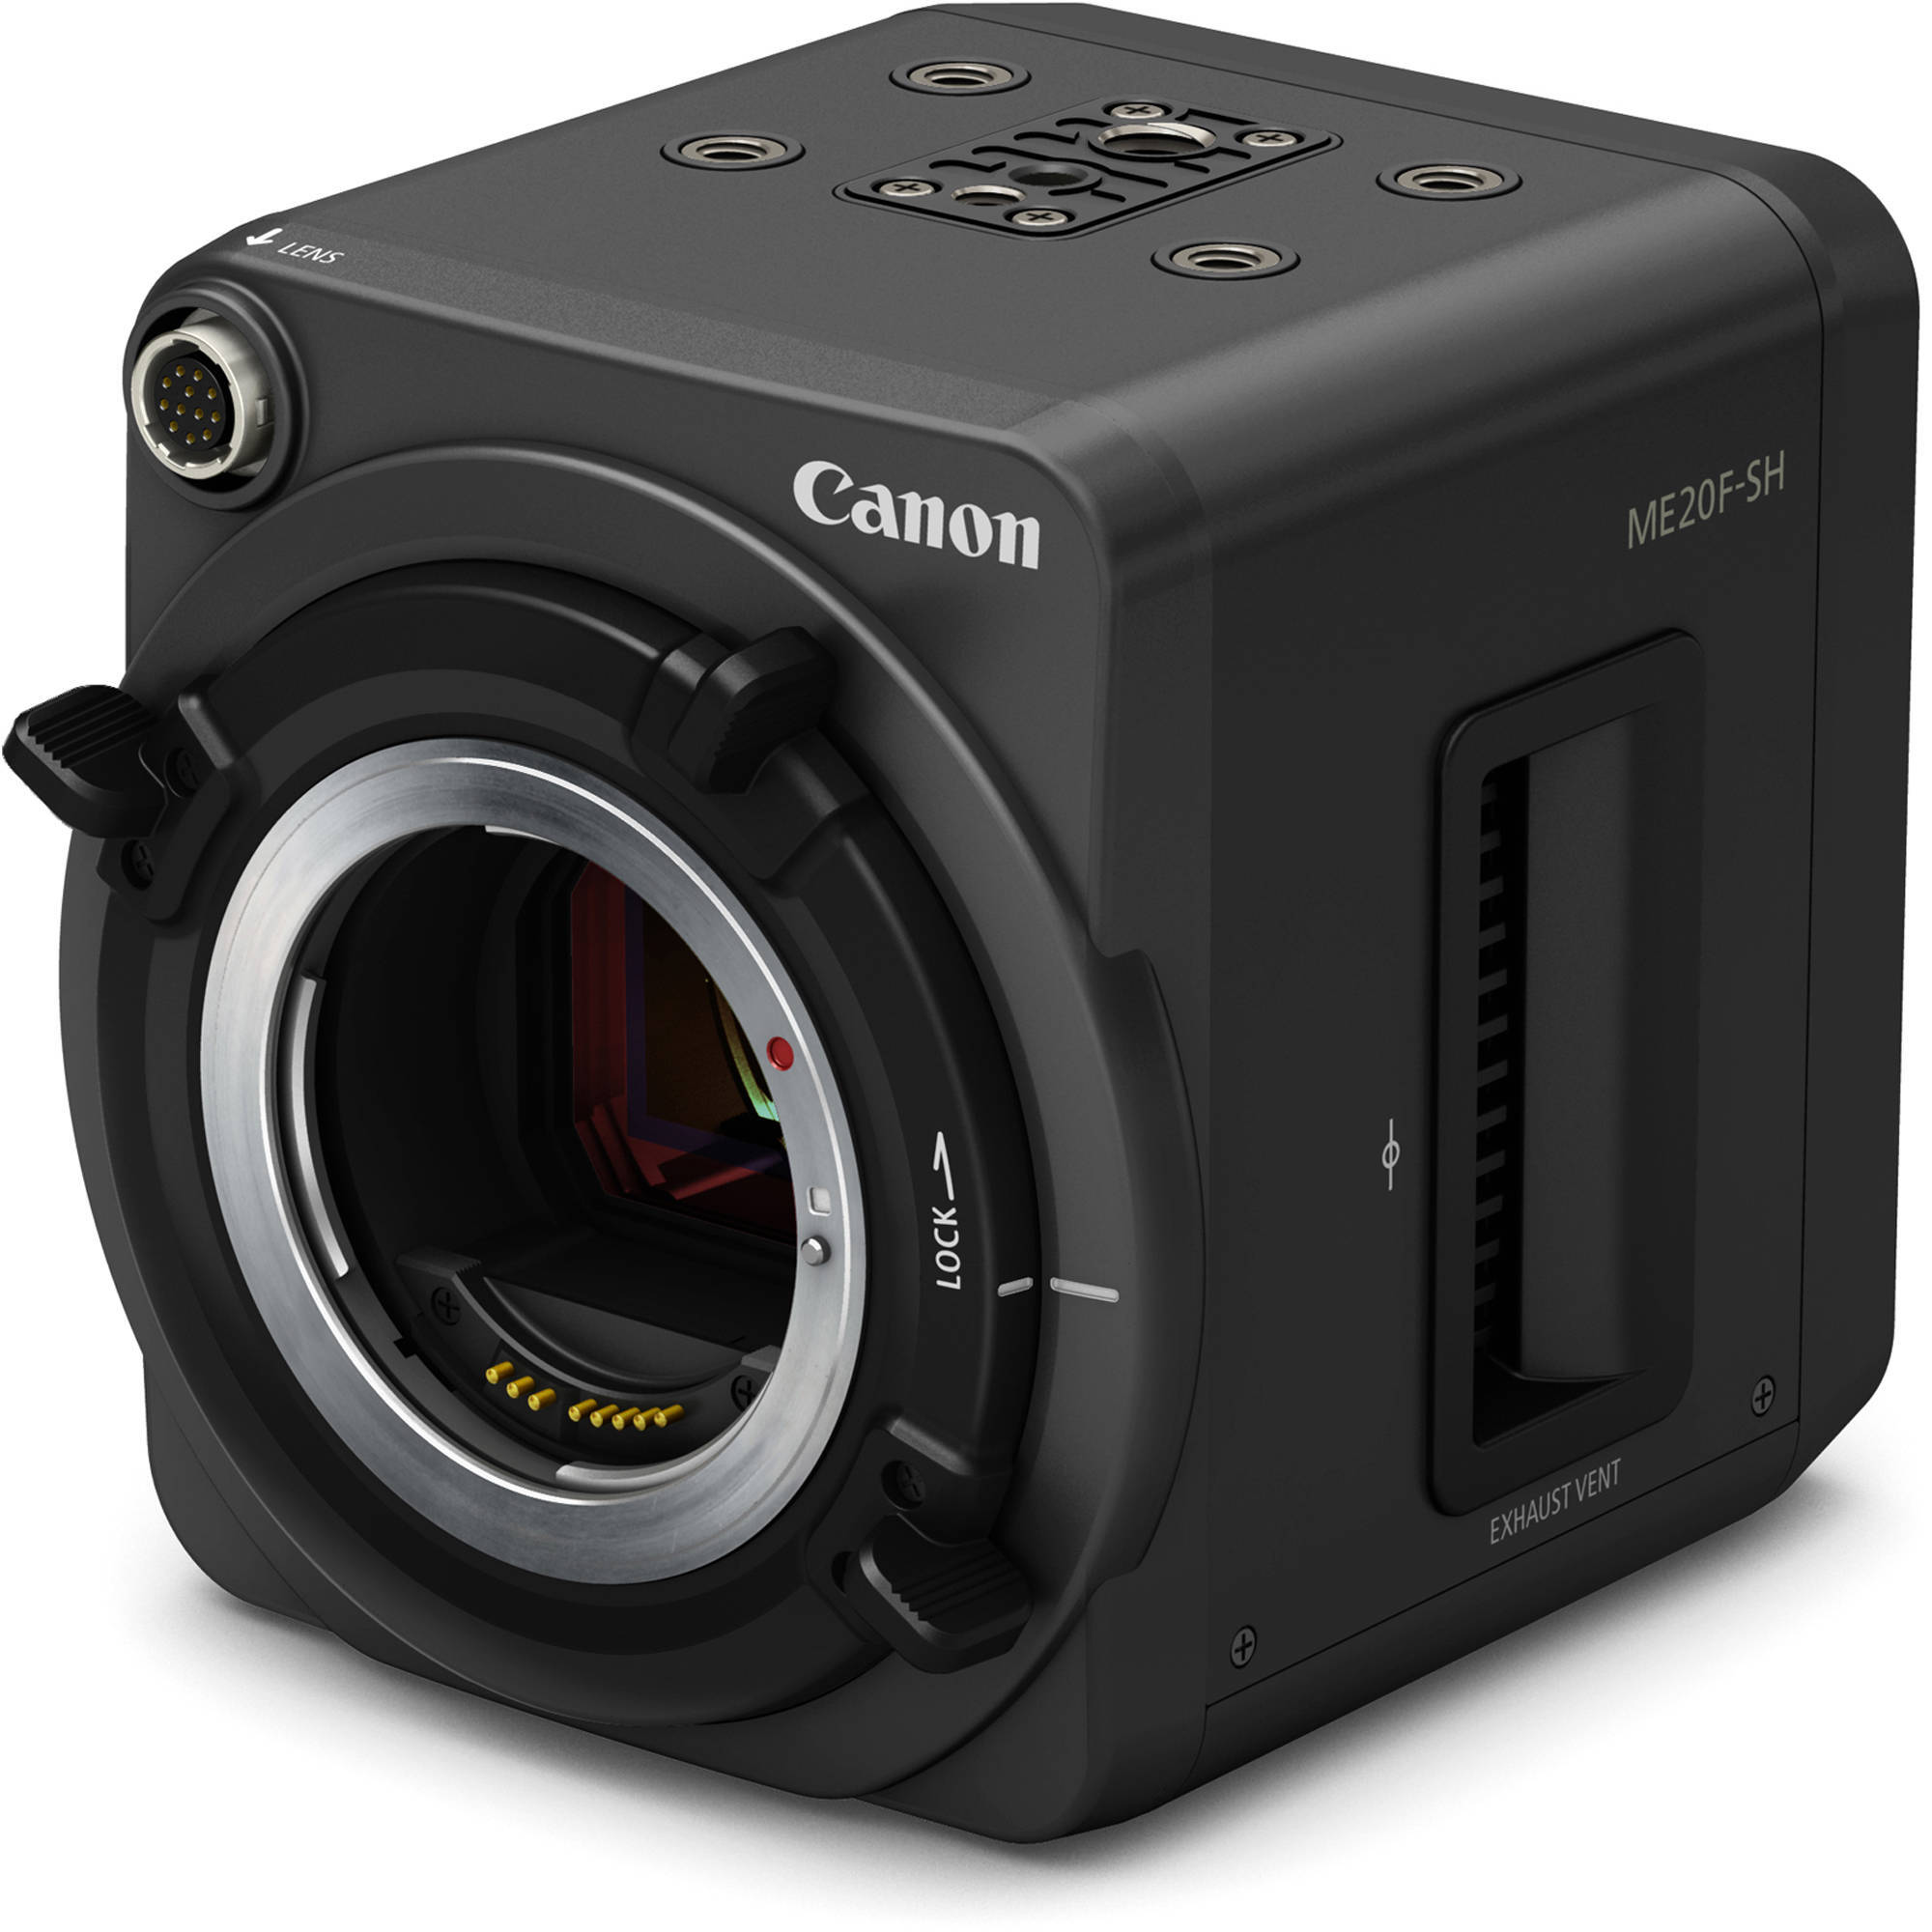 Máy quay phim Canon 20F-SH